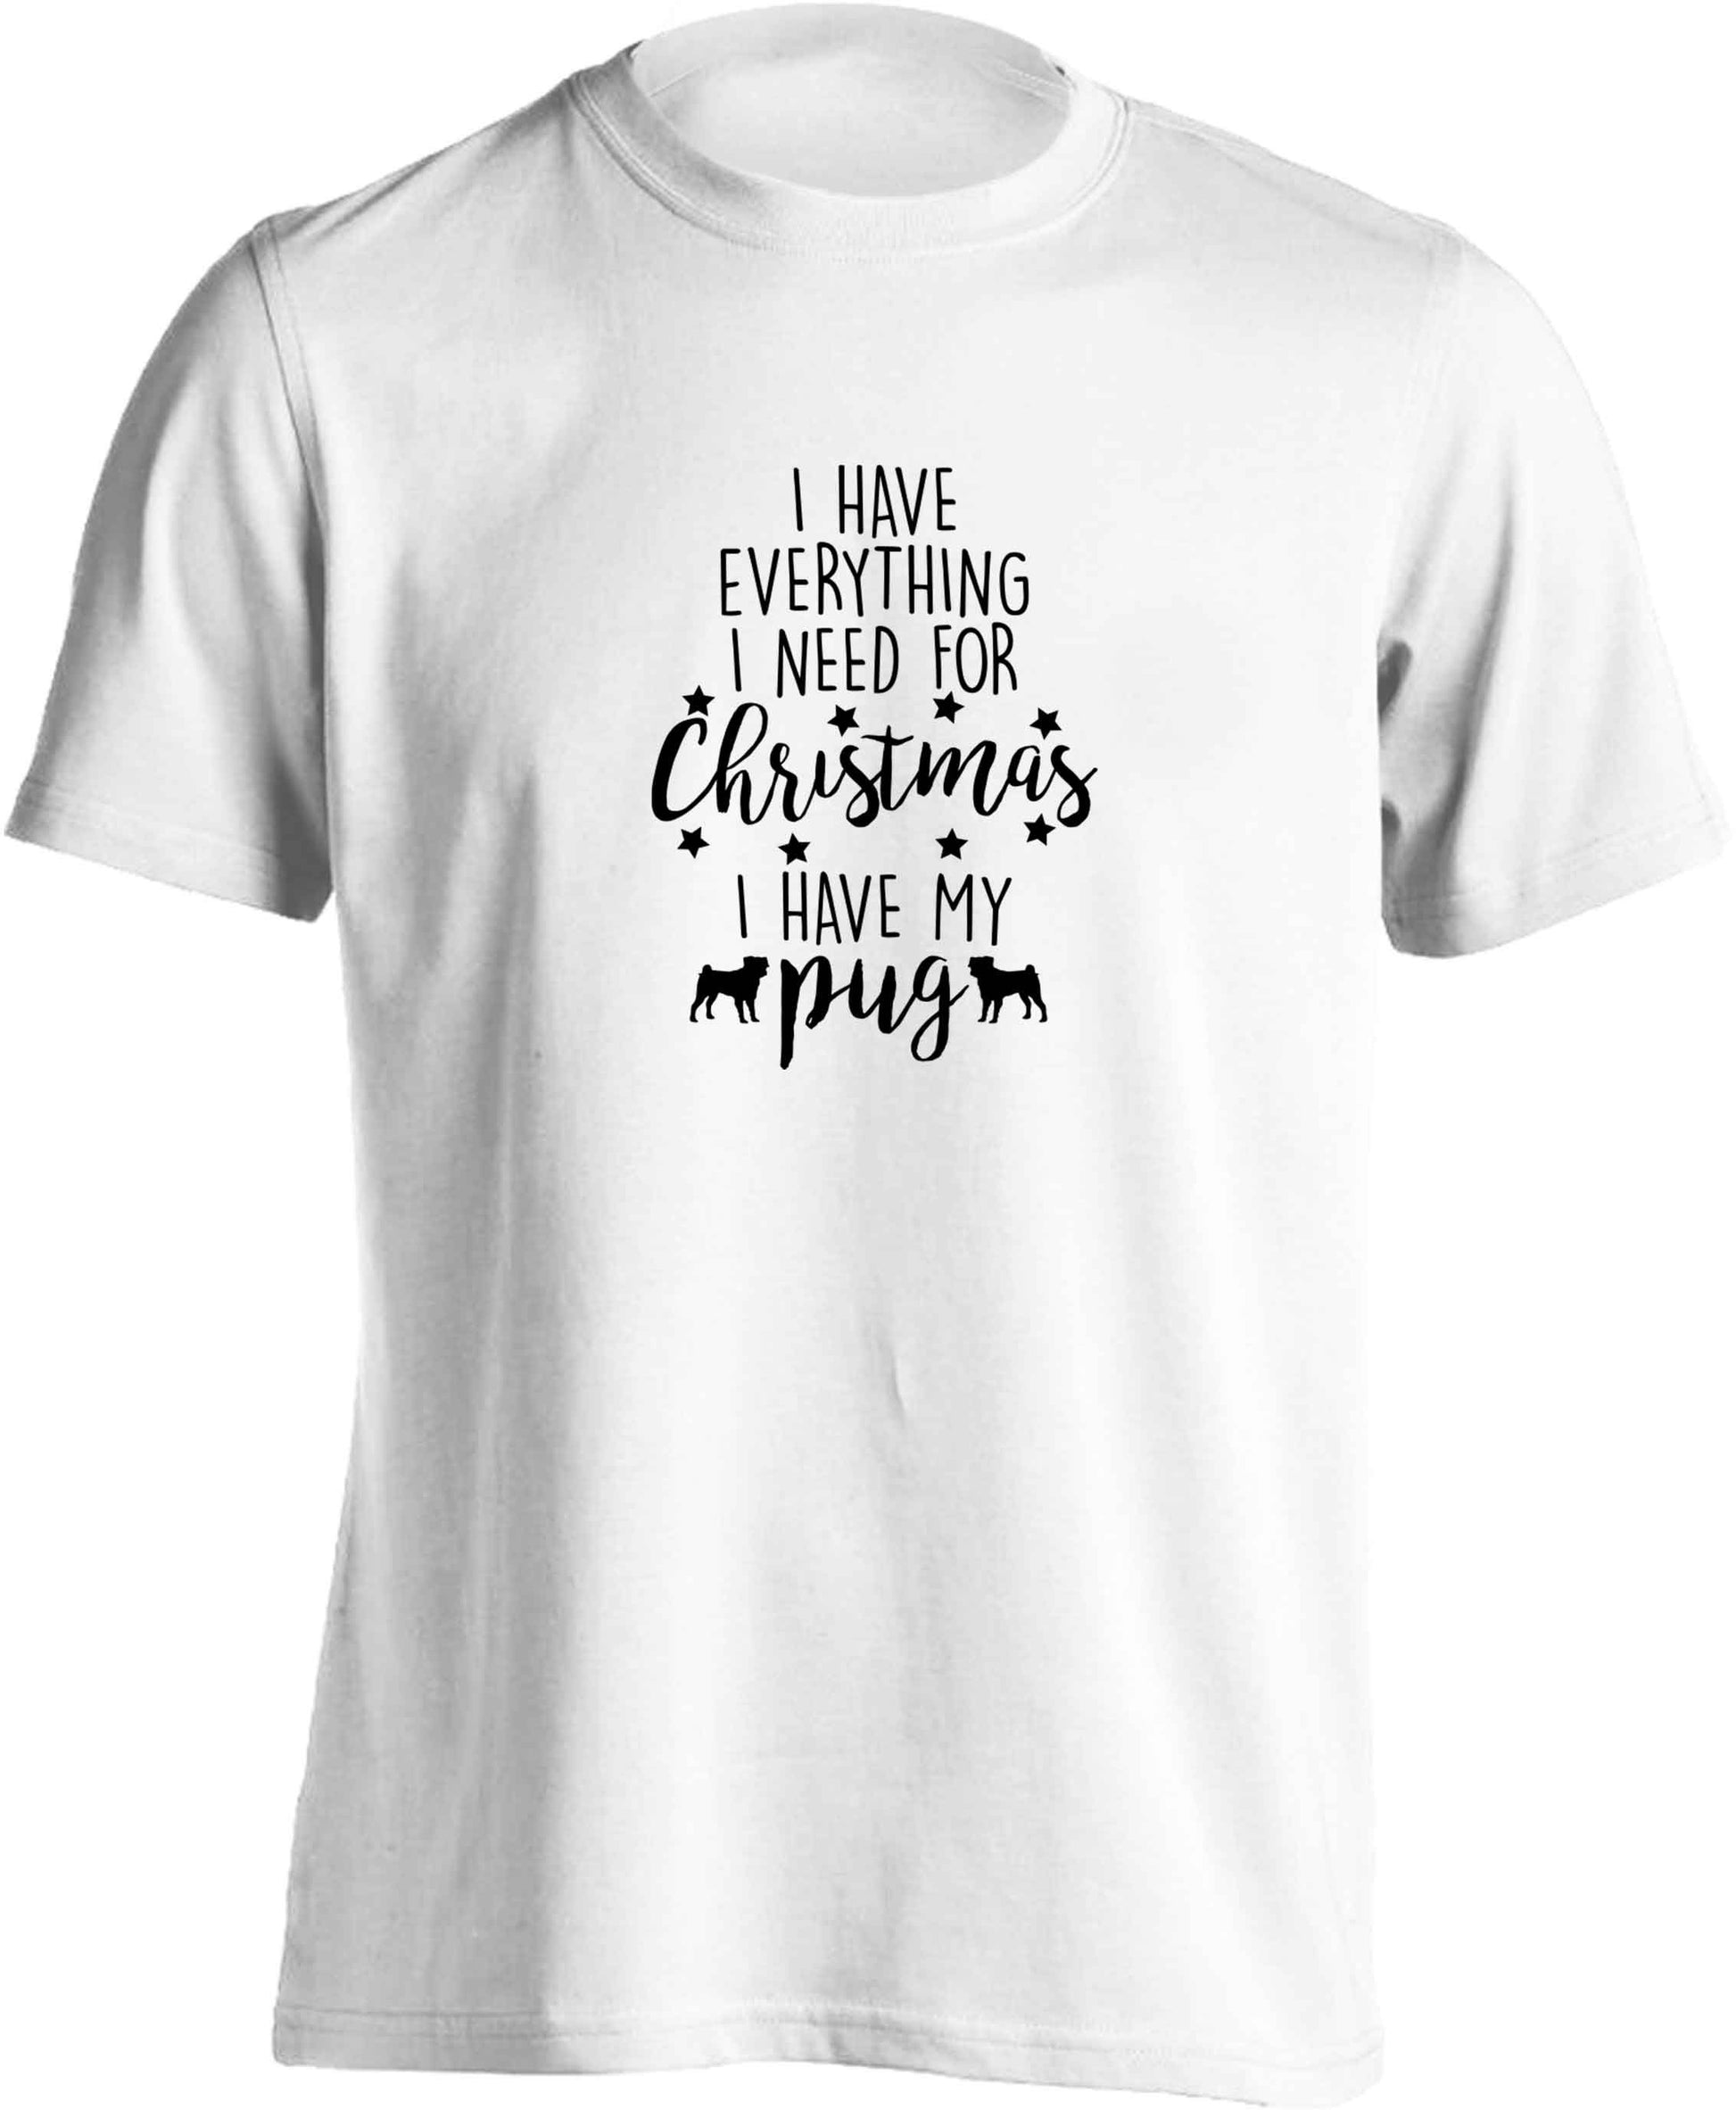 I have everything I need for Christmas I have my pug adults unisex white Tshirt 2XL